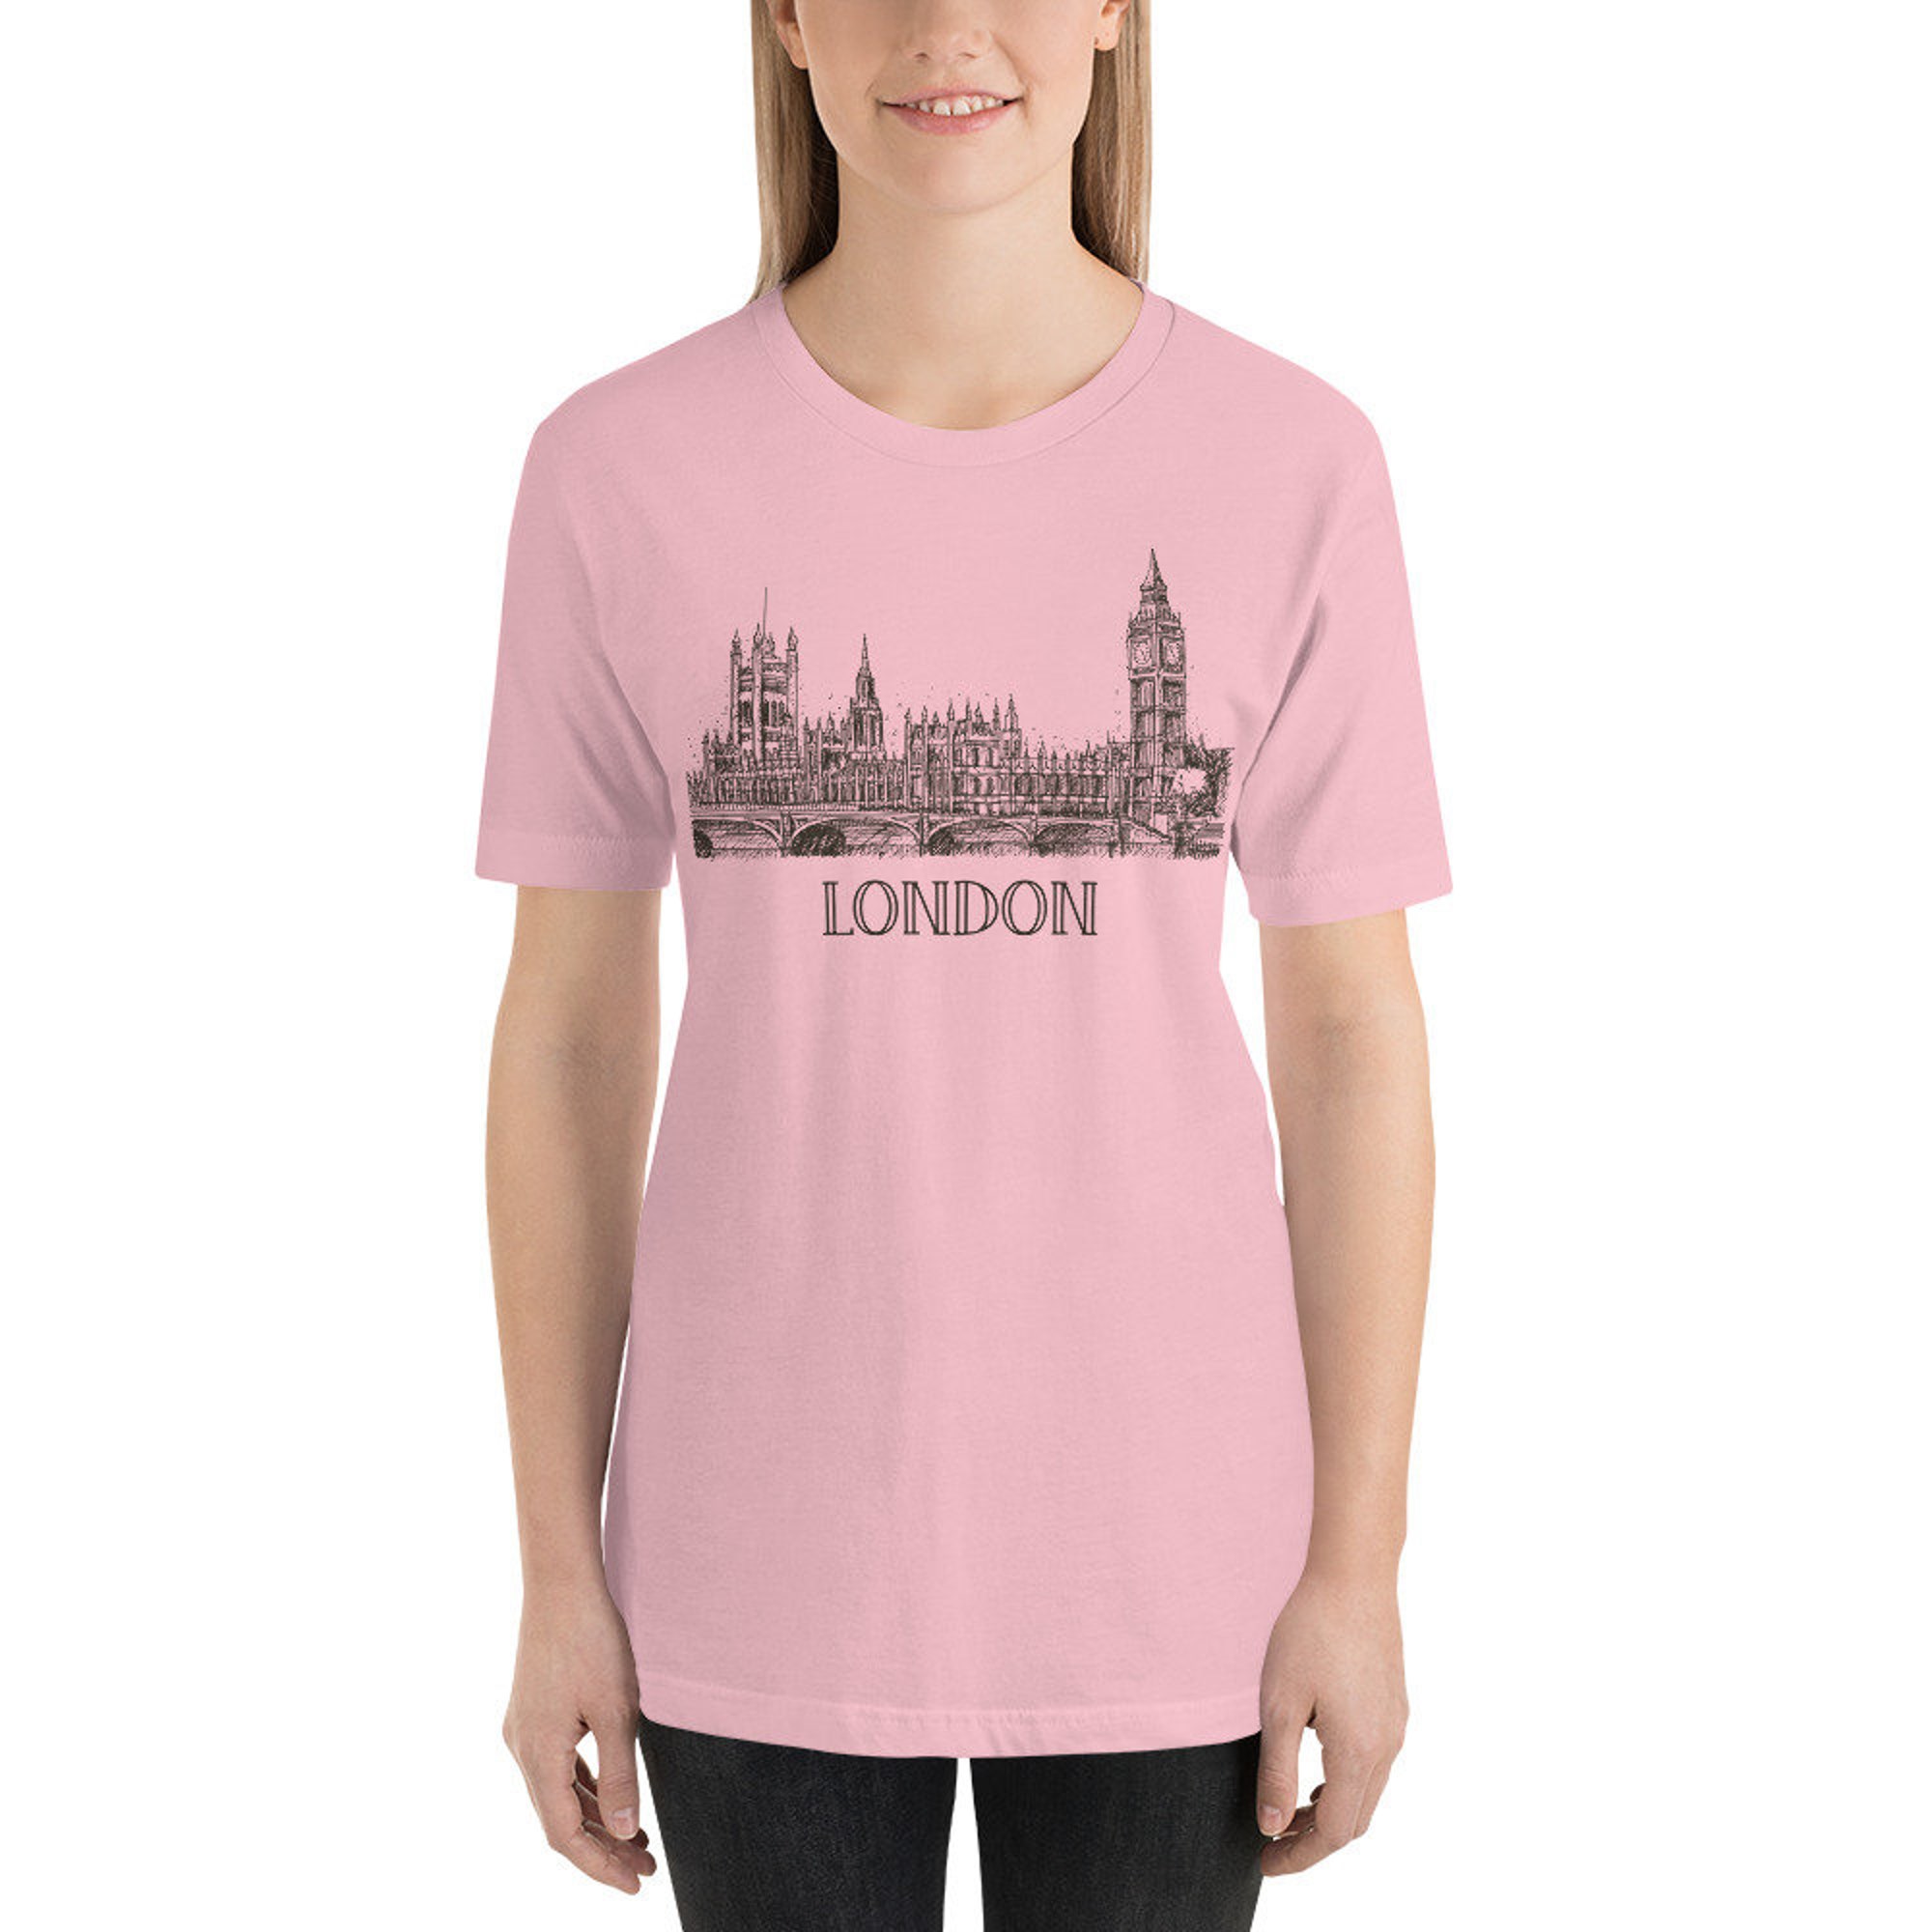 Discover London Shirt, London Souvenir, London Vacation, I Love London Shirt